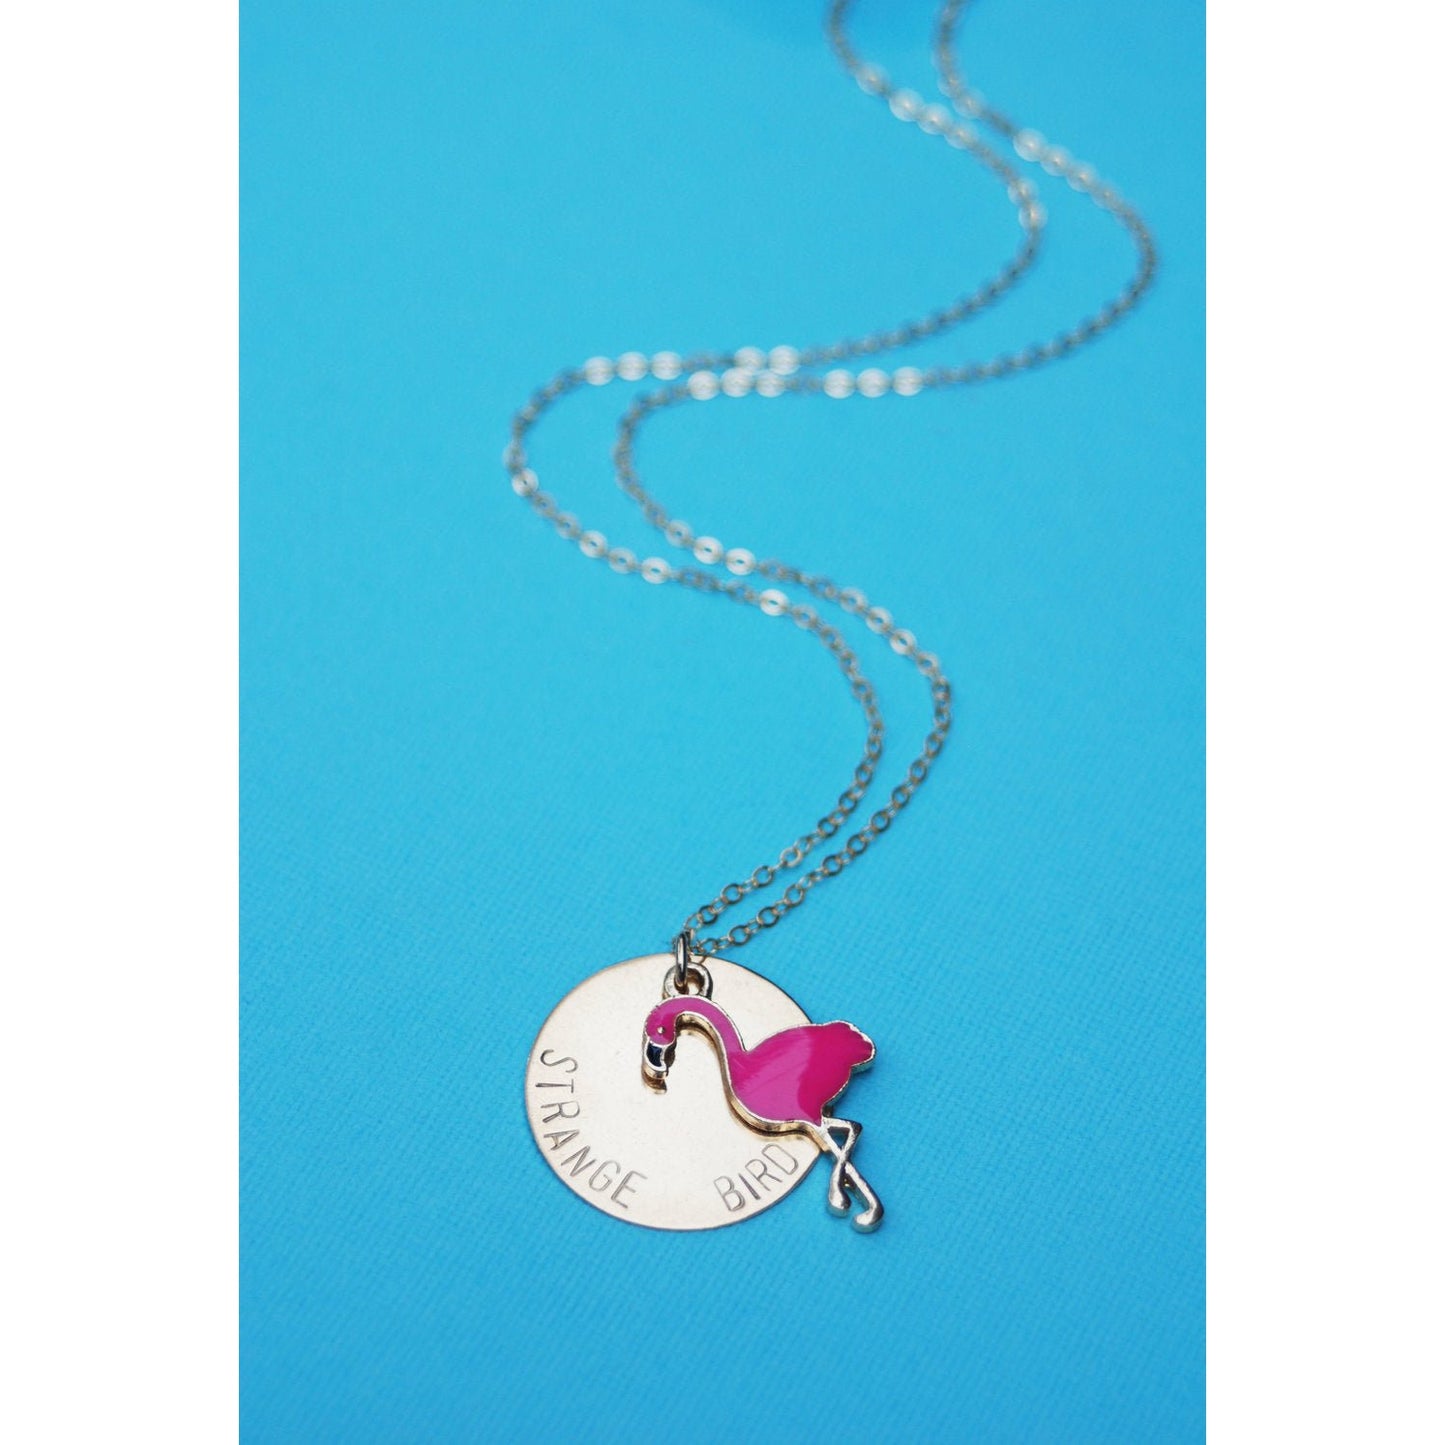 Strange Bird Stamped Flamingo Necklace in Brass or Silver